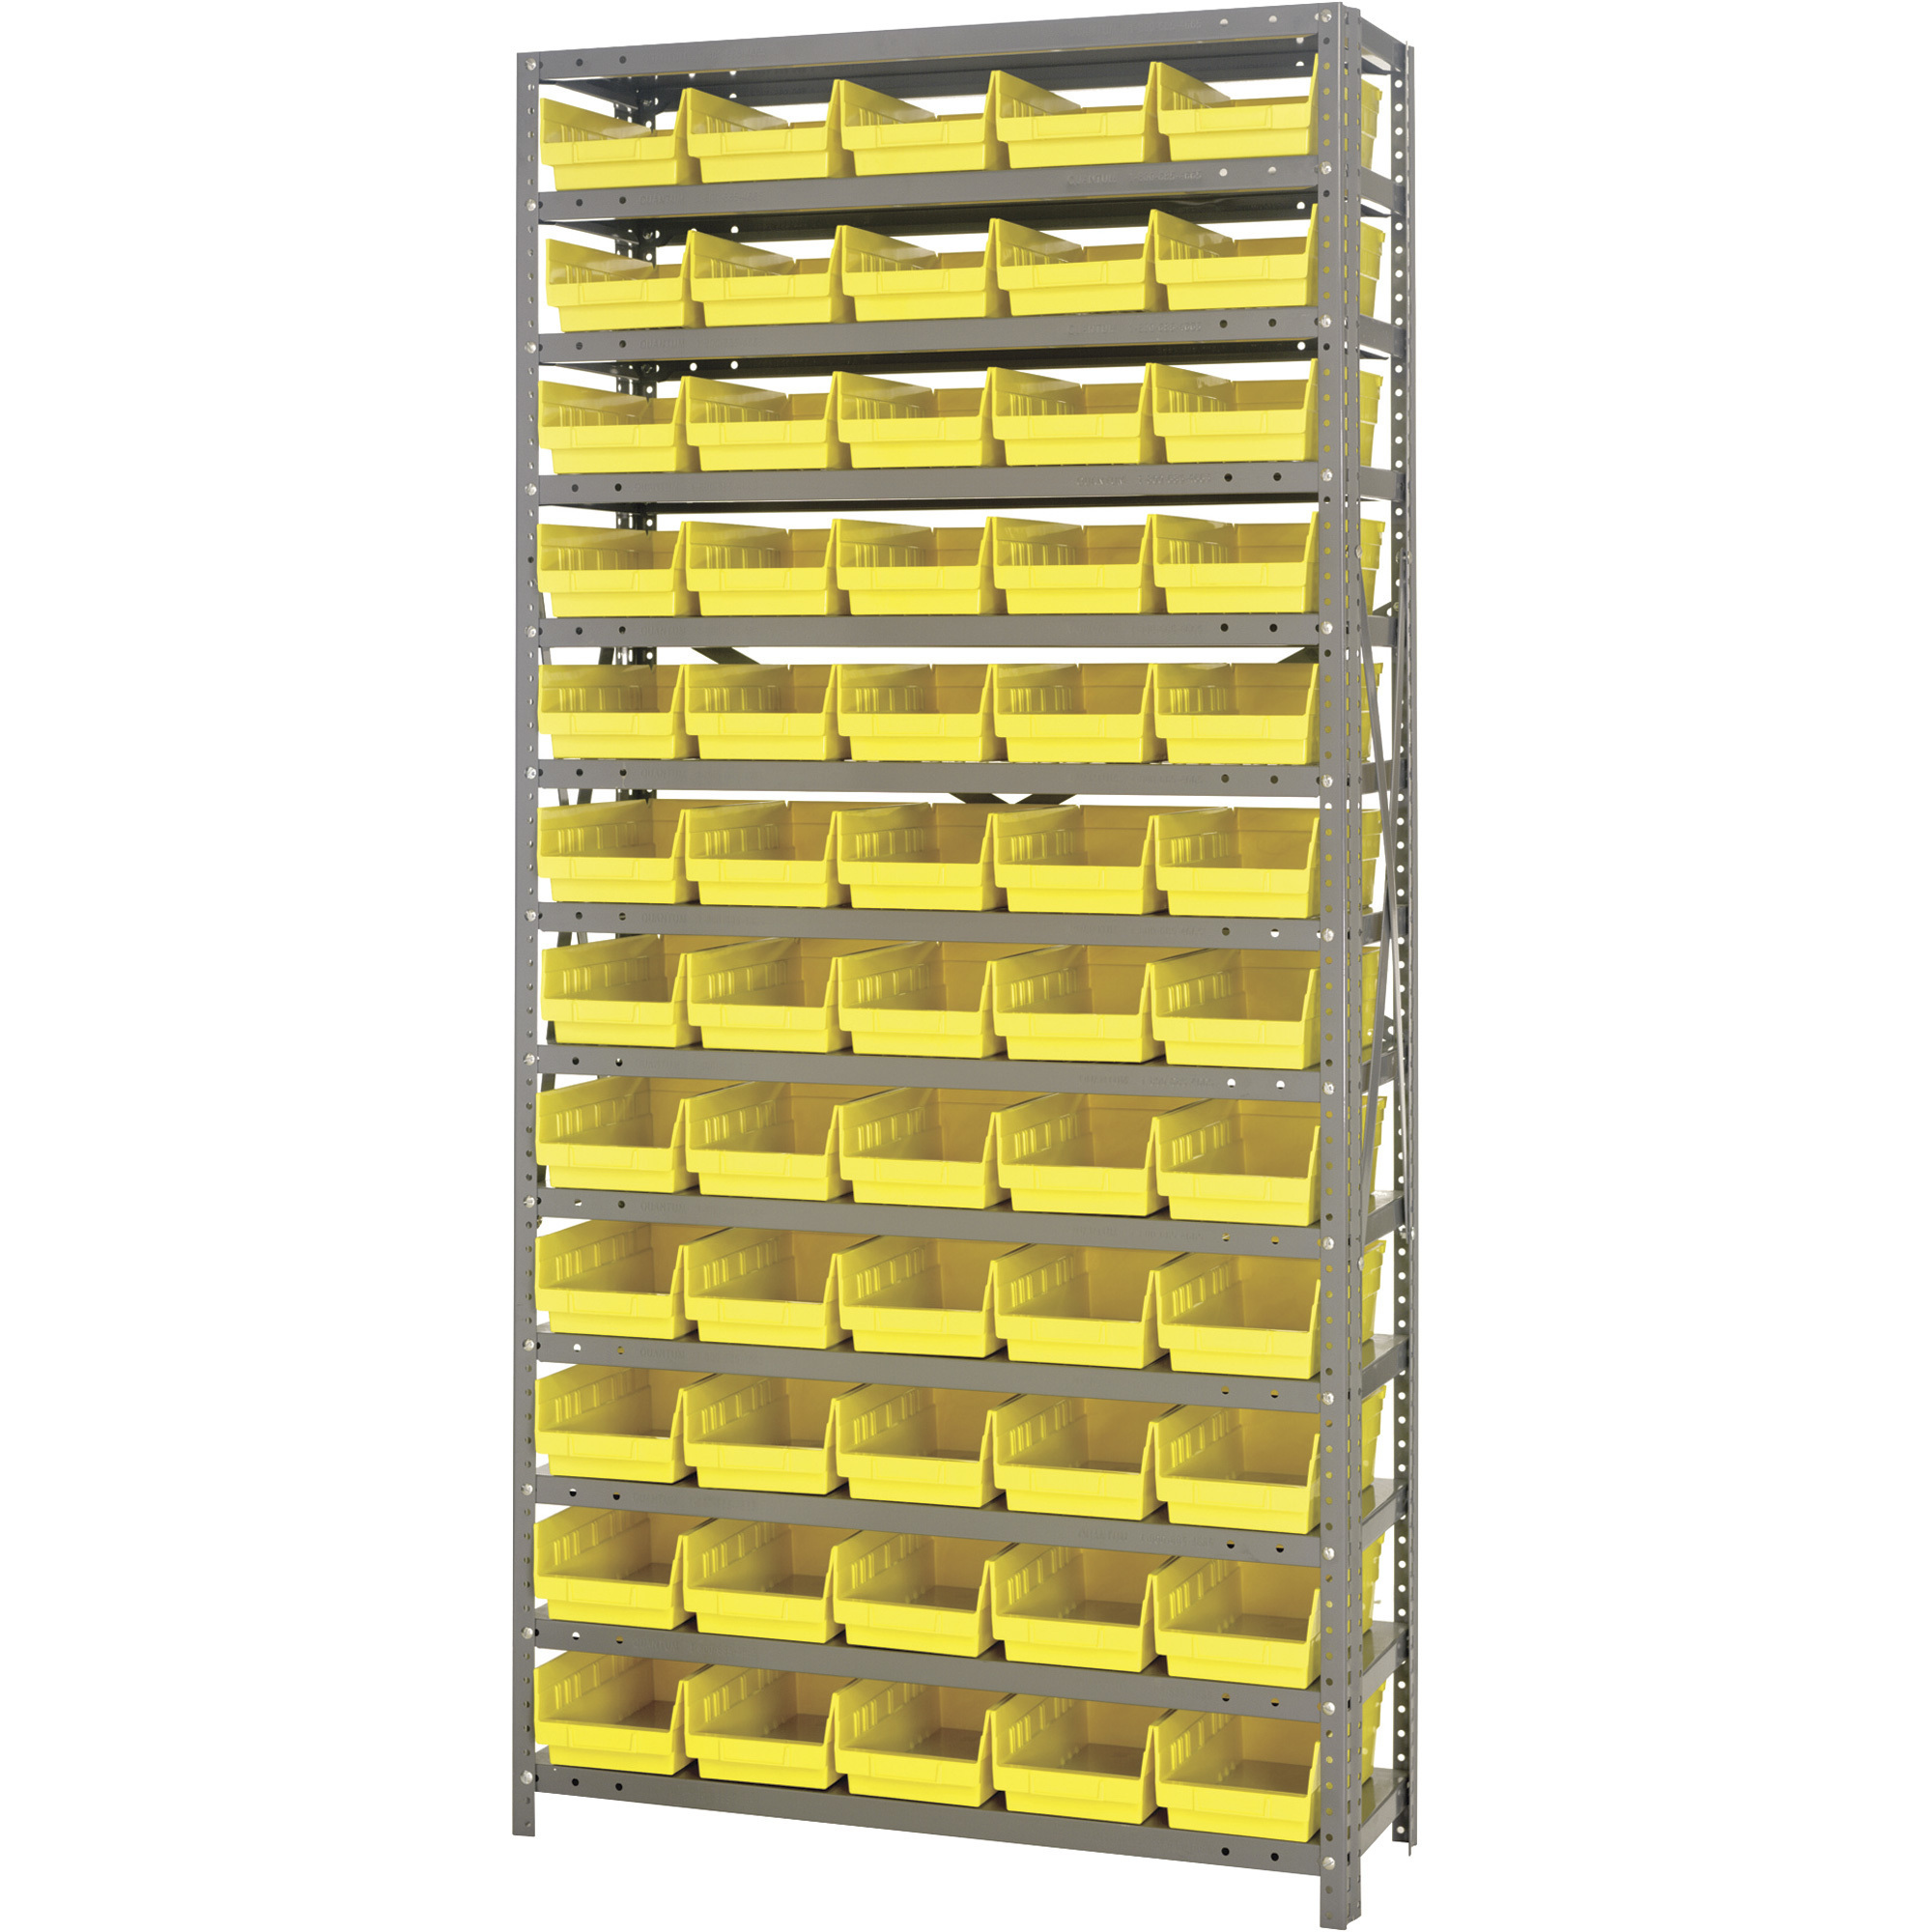 Quantum Storage Single Side Metal Shelving Unit With 60 Bins, 12Inch x 36Inch x 75Inch Rack Size, Yellow, Model 1275-102YL